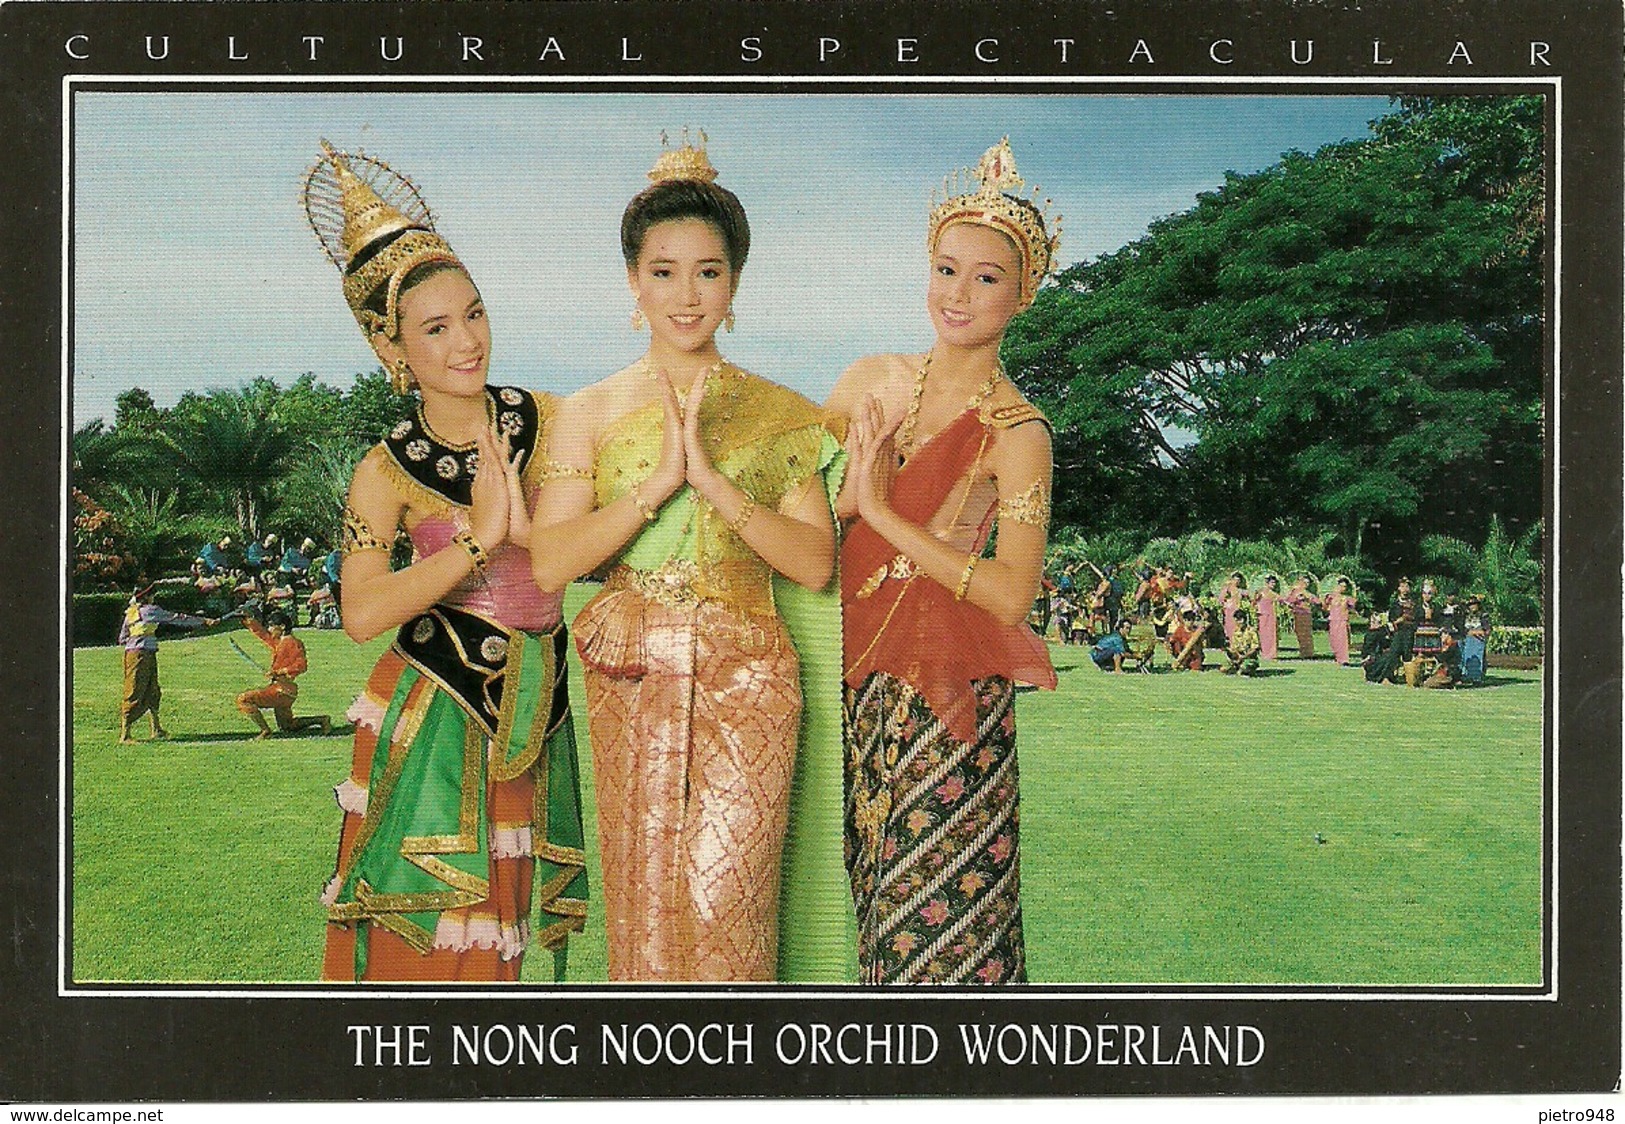 Thailandia (Thailand) Pattaya, The Nong Nooch Orchid Wonderland, Cultural Spectacular - Tailandia